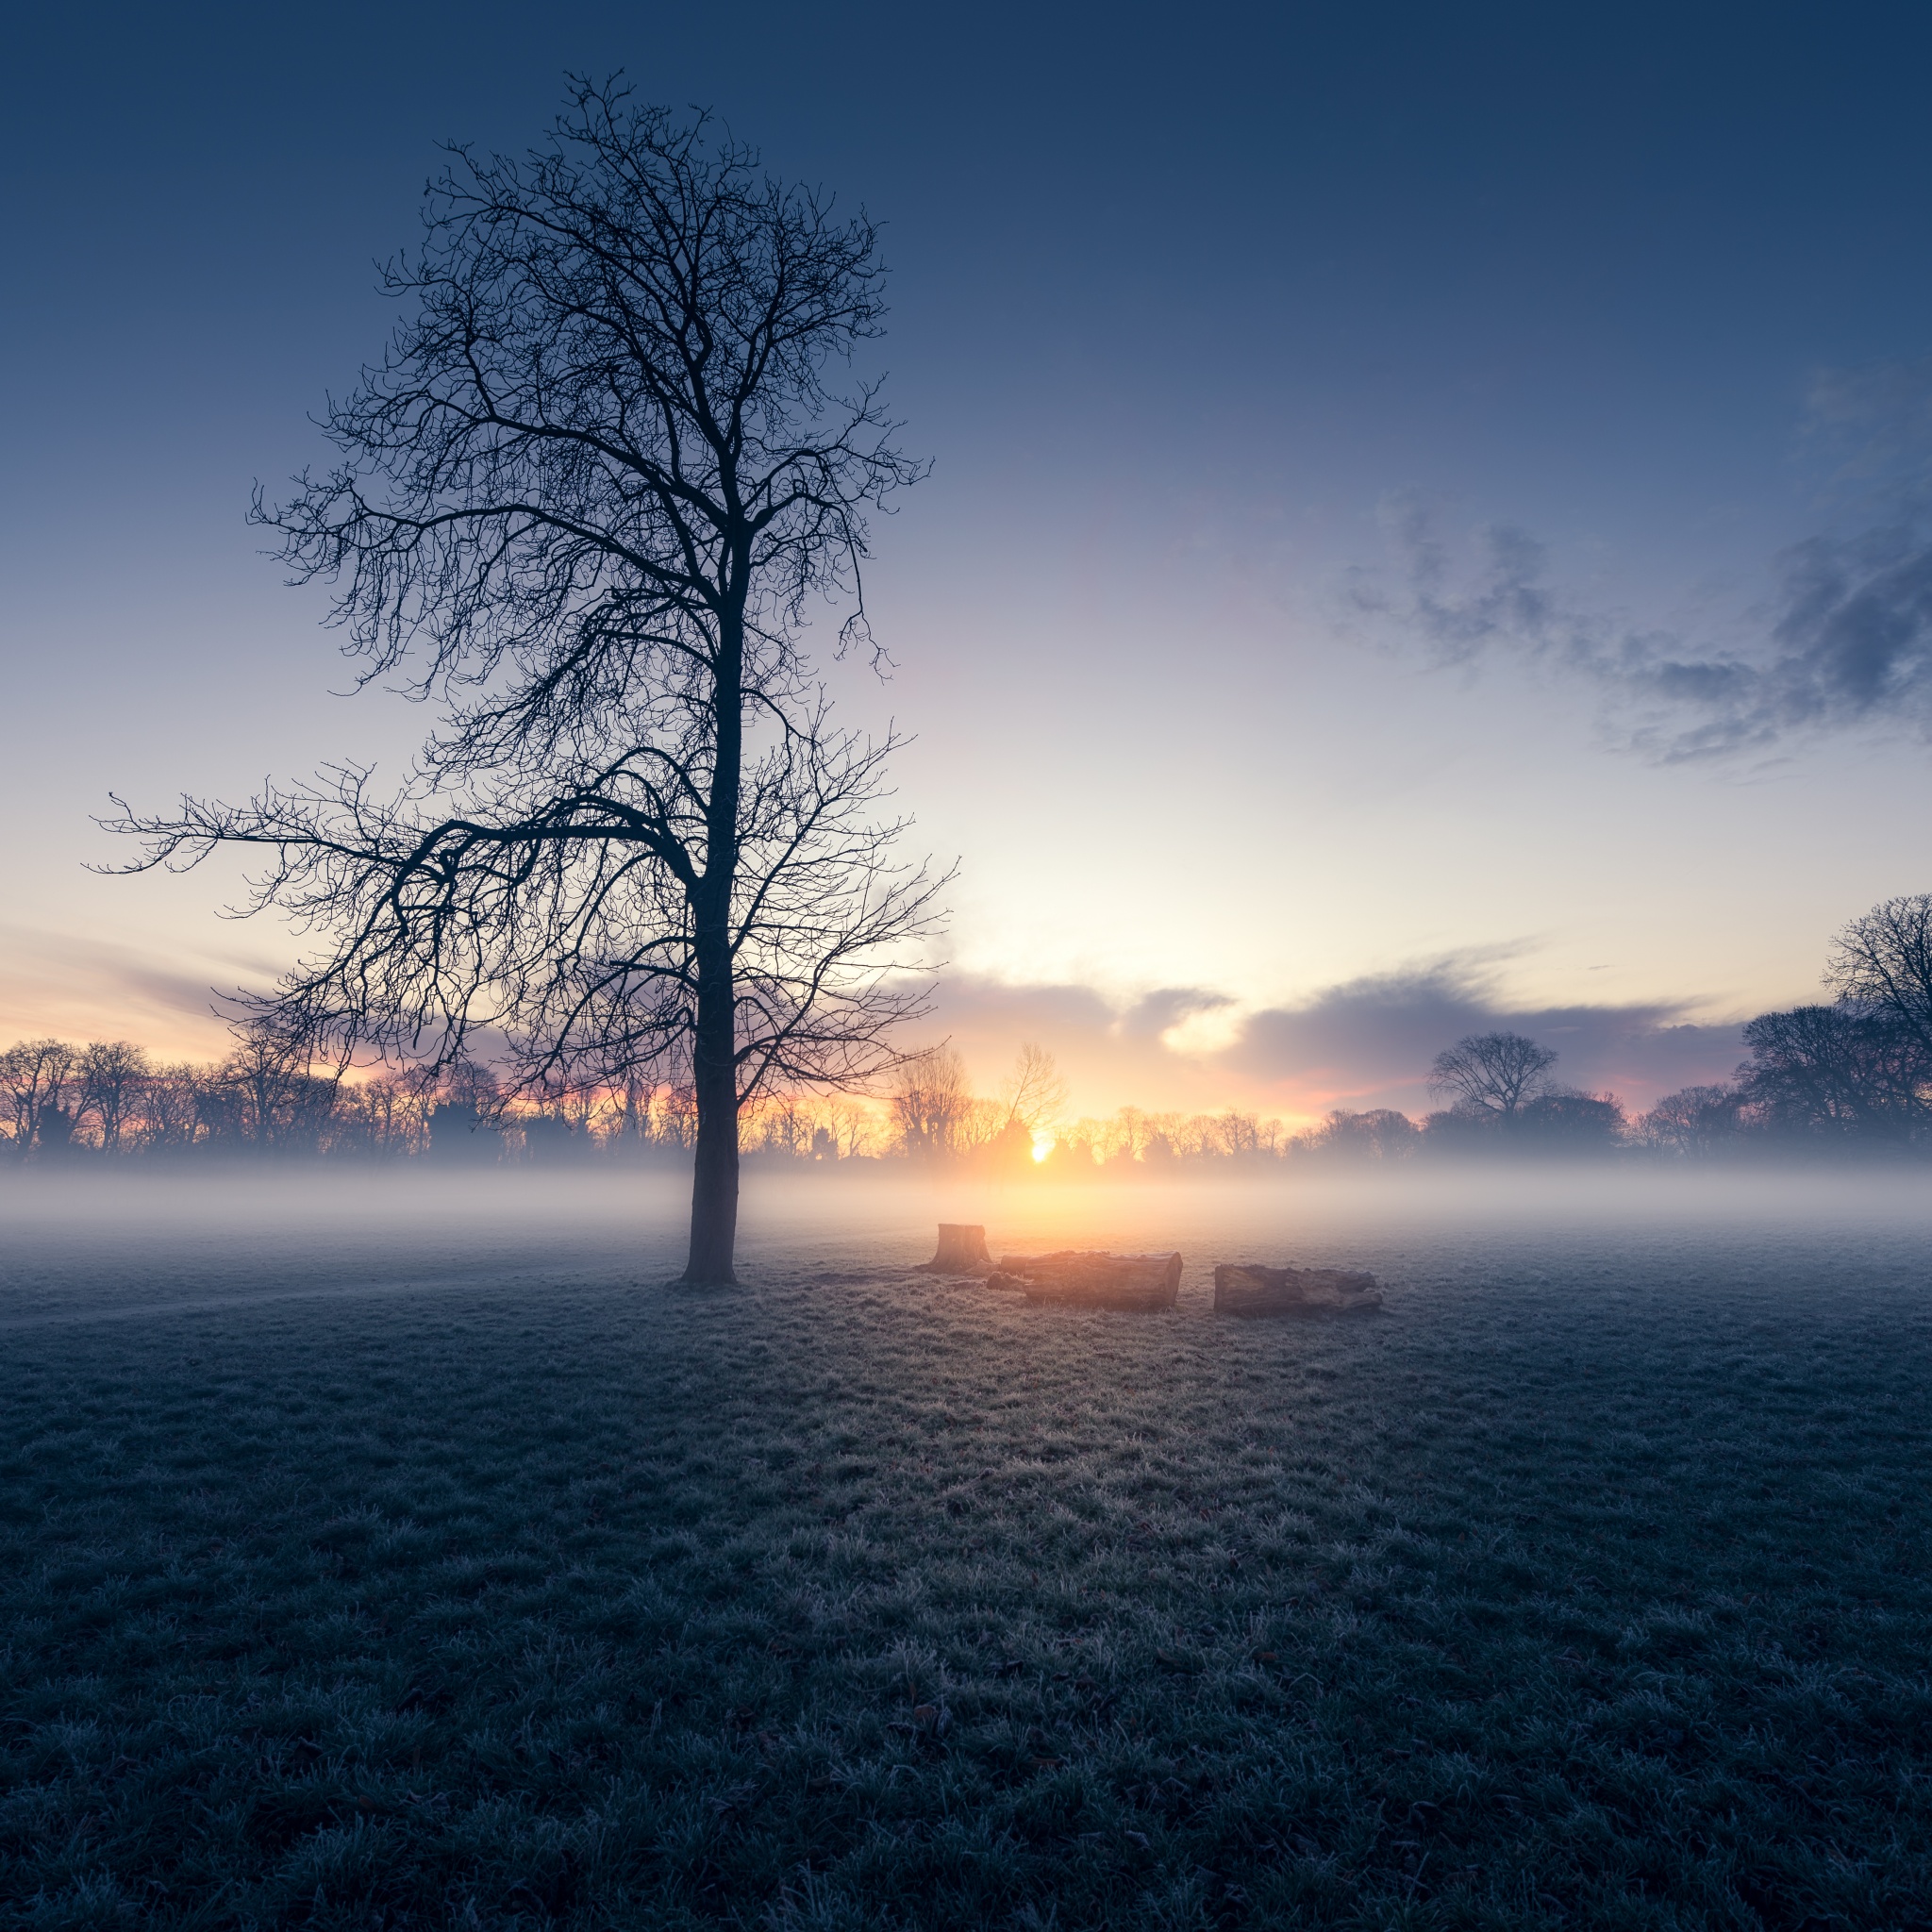 1,000+ Free Morning Mist & Nature Images - Pixabay